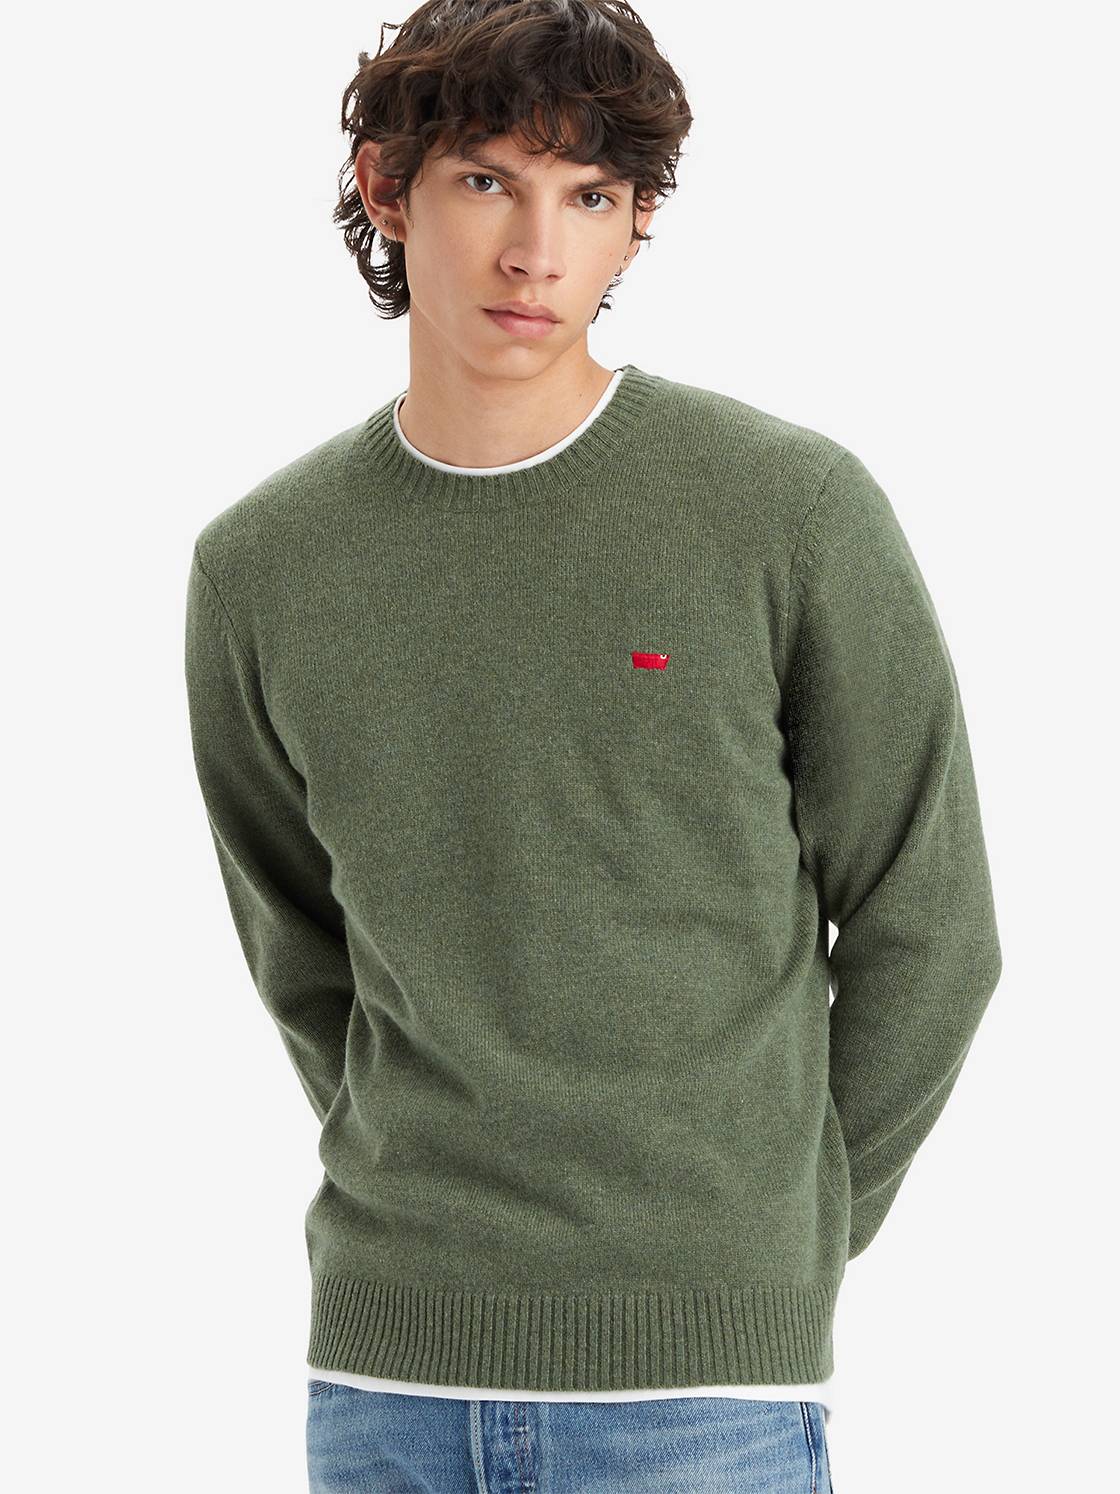 Original Housemark Sweater 1